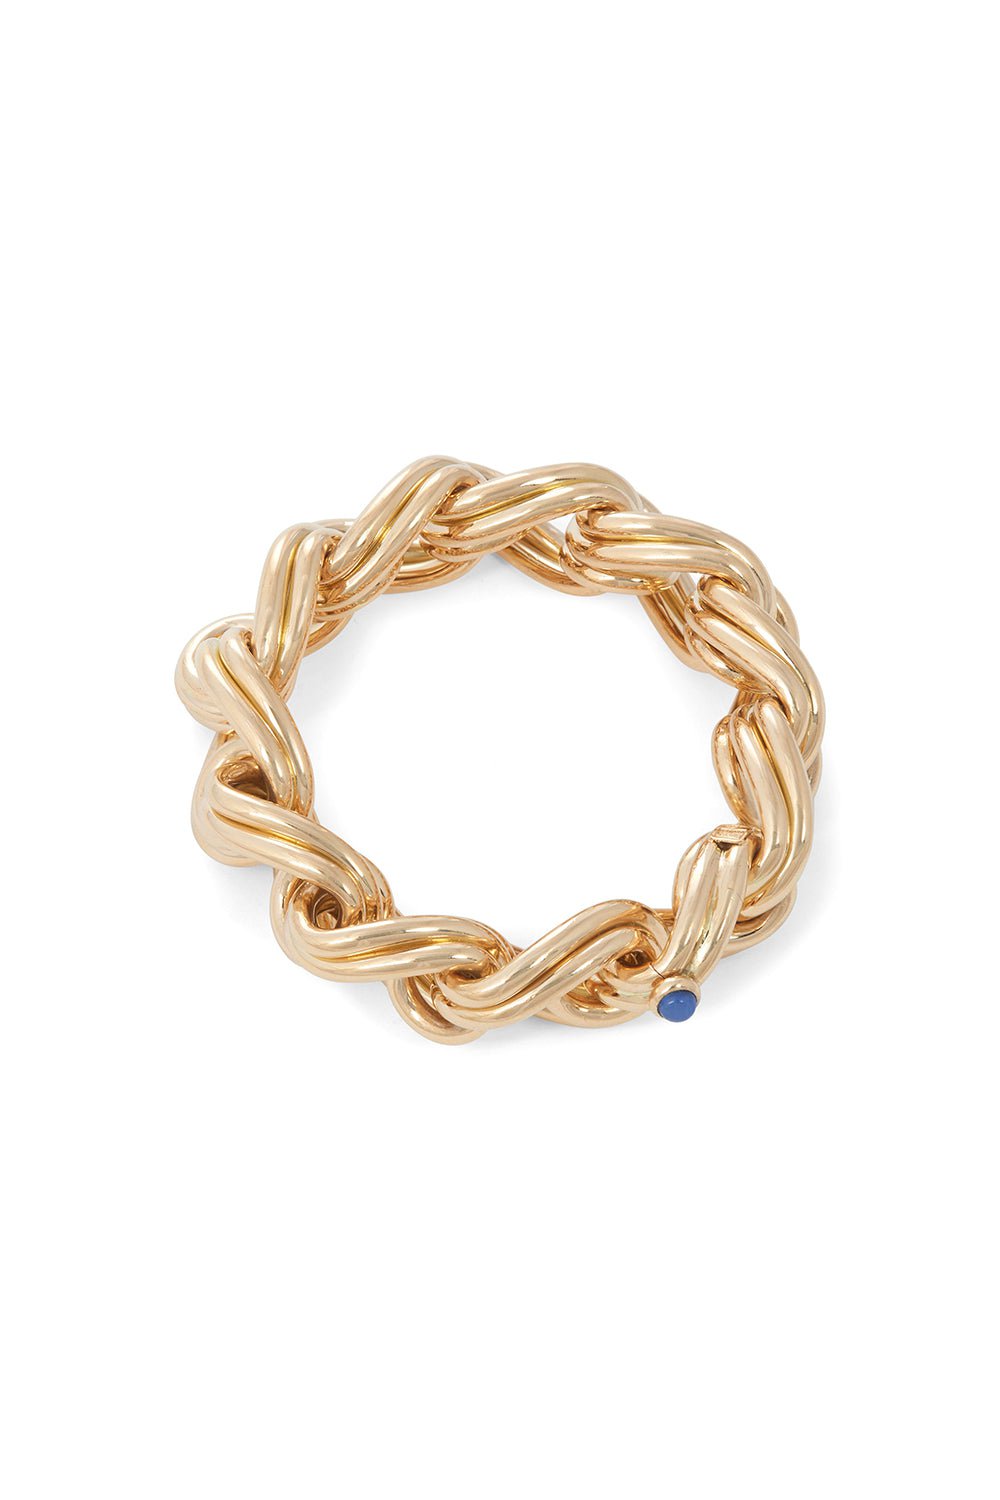 SIDNEY GARBER-Double Loop Link Bracelet-YELLOW GOLD